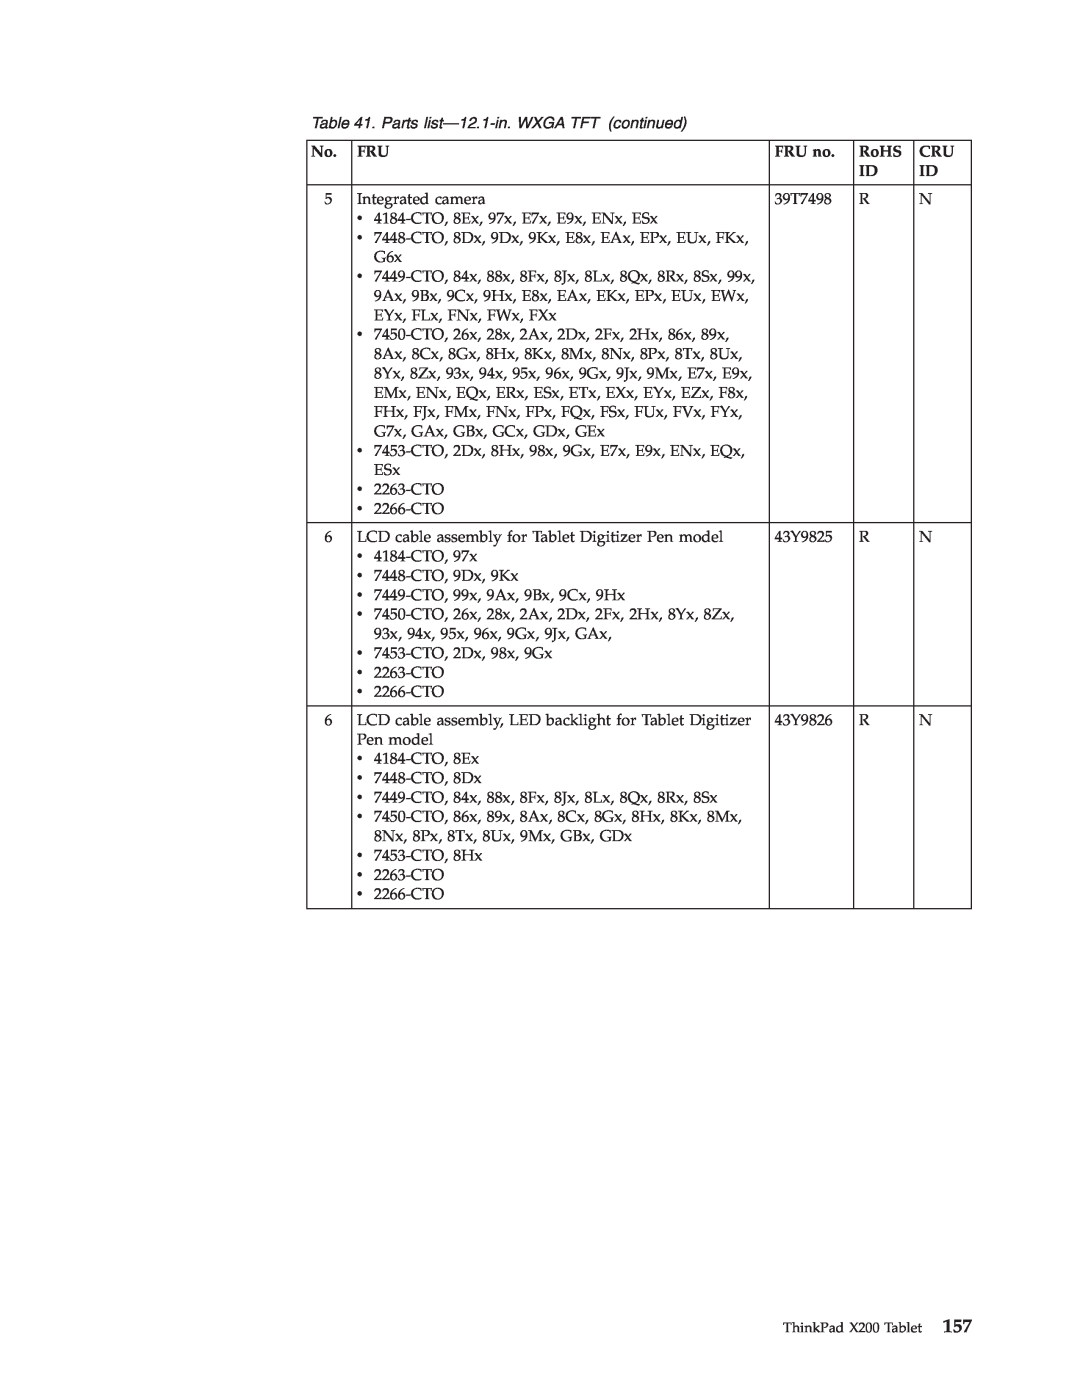 Lenovo X200 manual Parts list—12.1-in.WXGA TFT continued, Integrated camera 